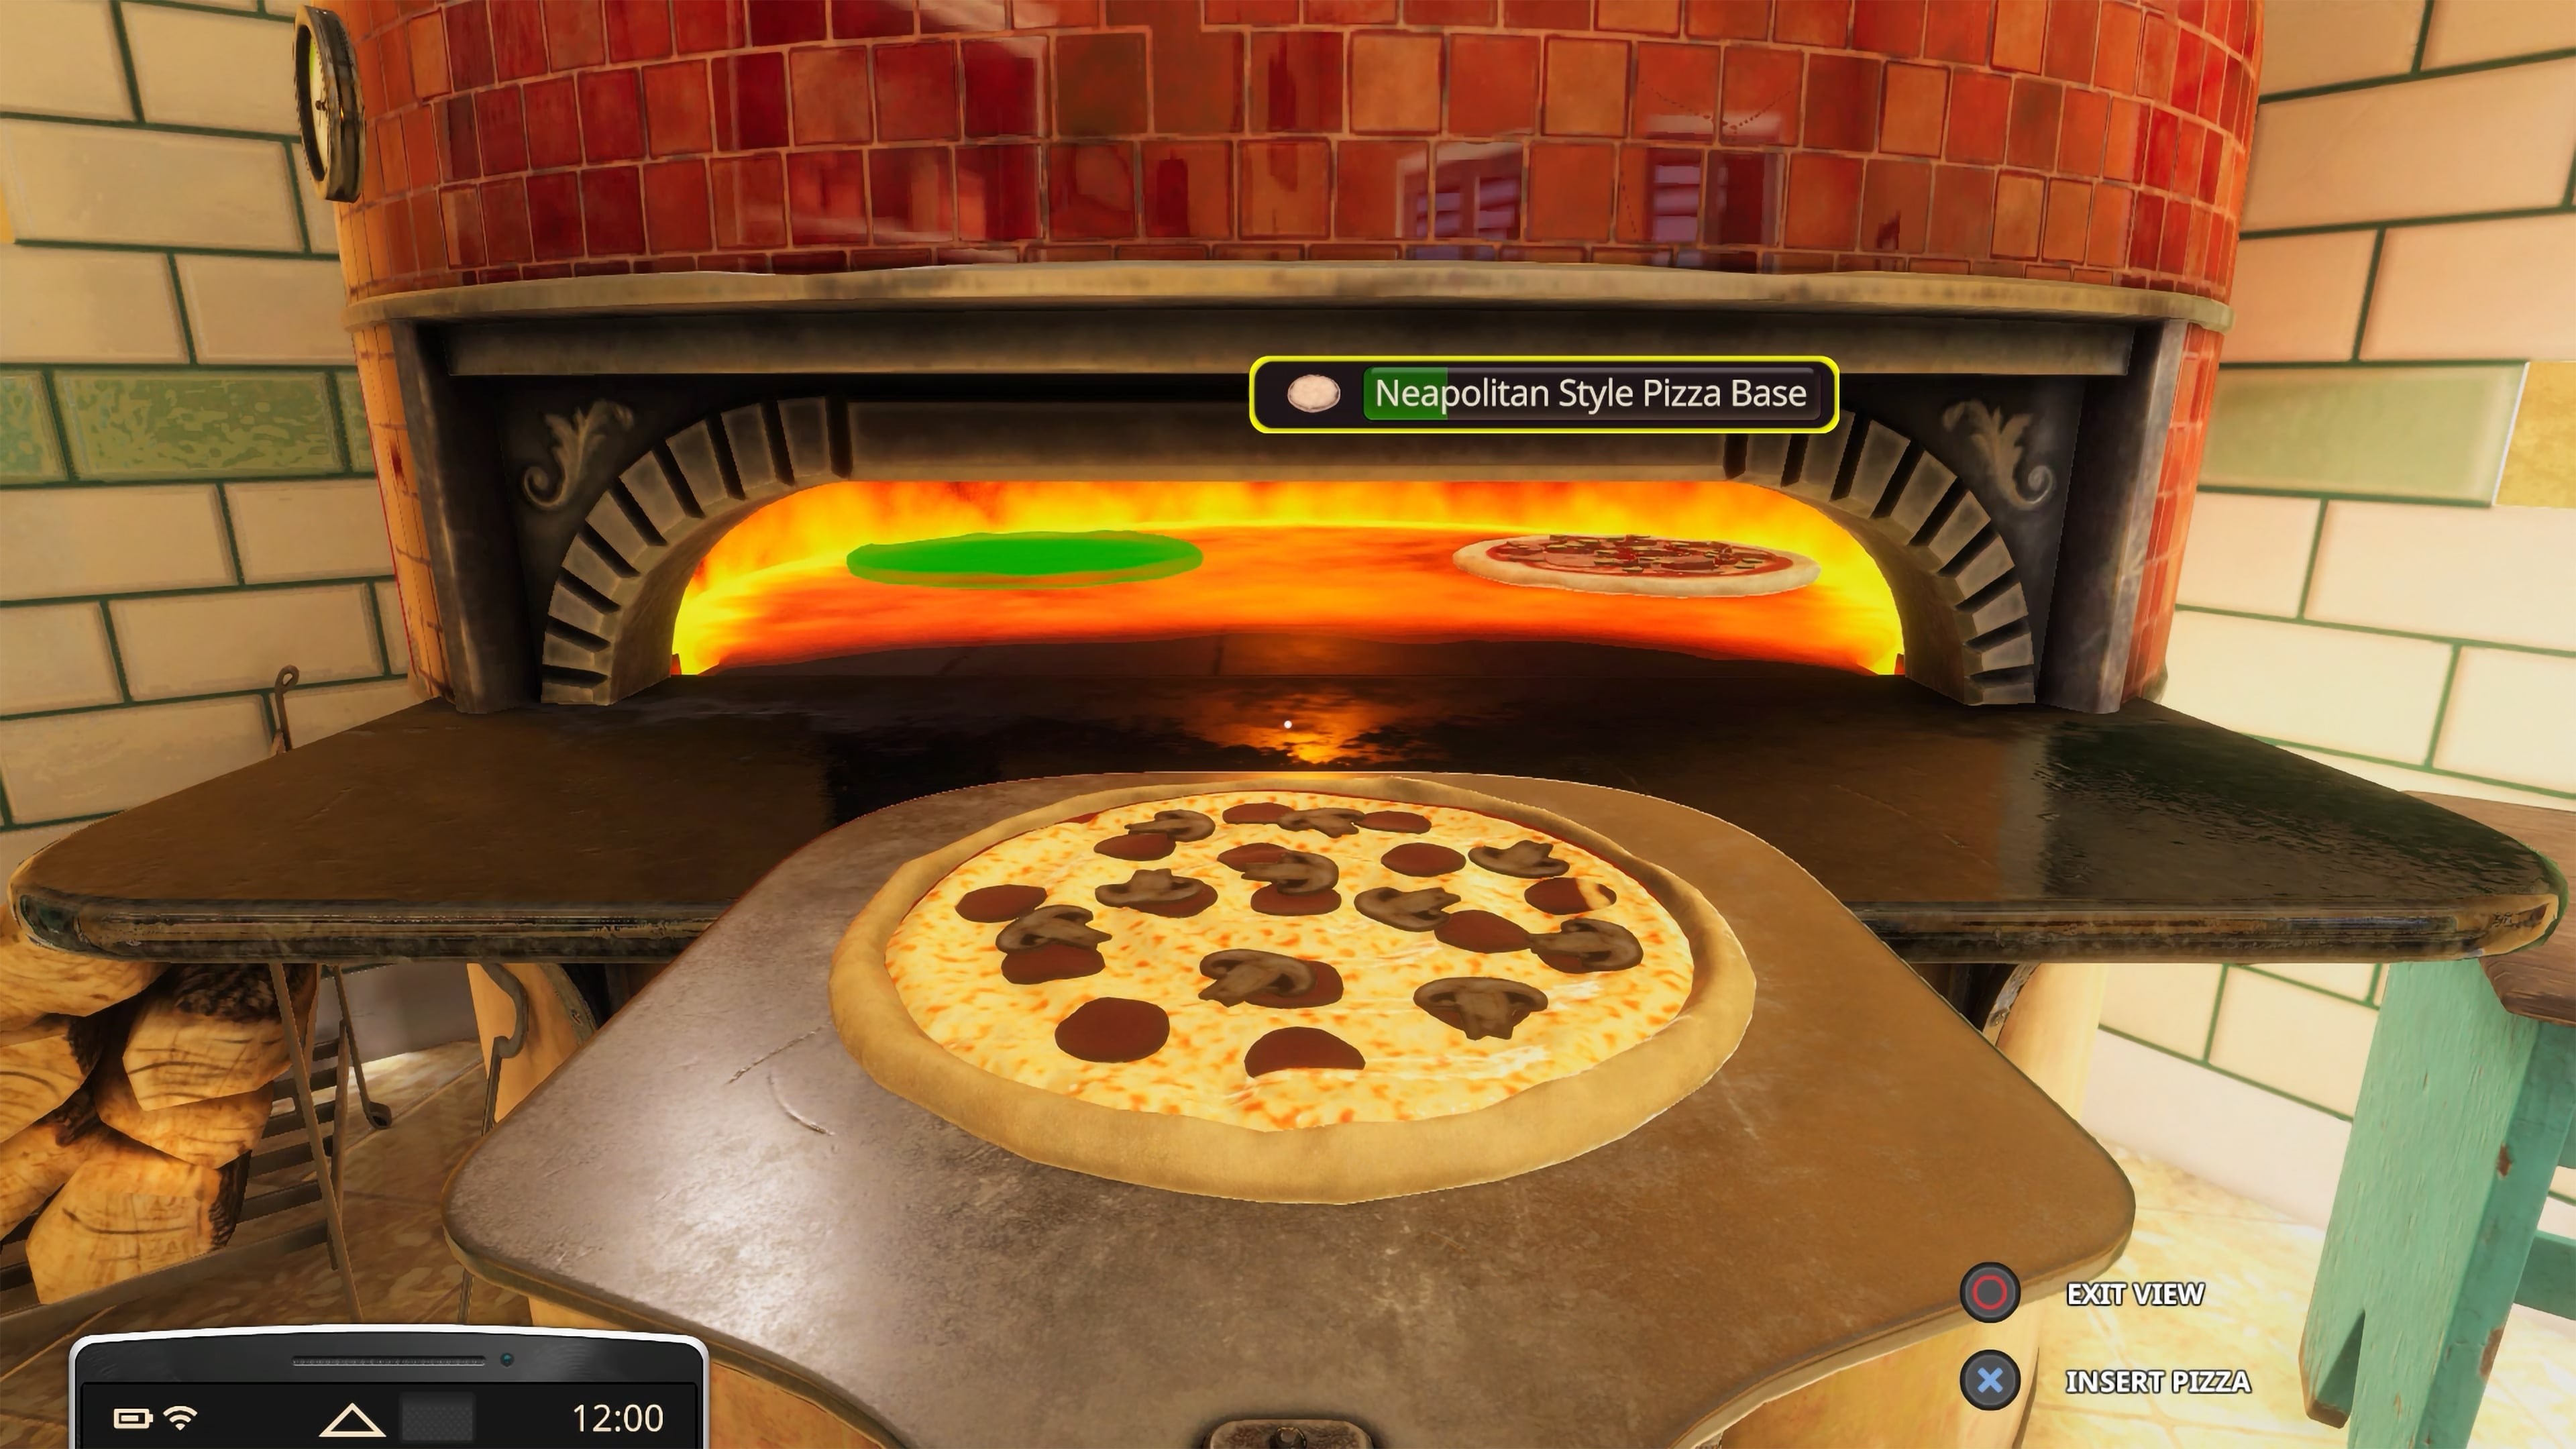 Buy Cooking Simulator - Pizza